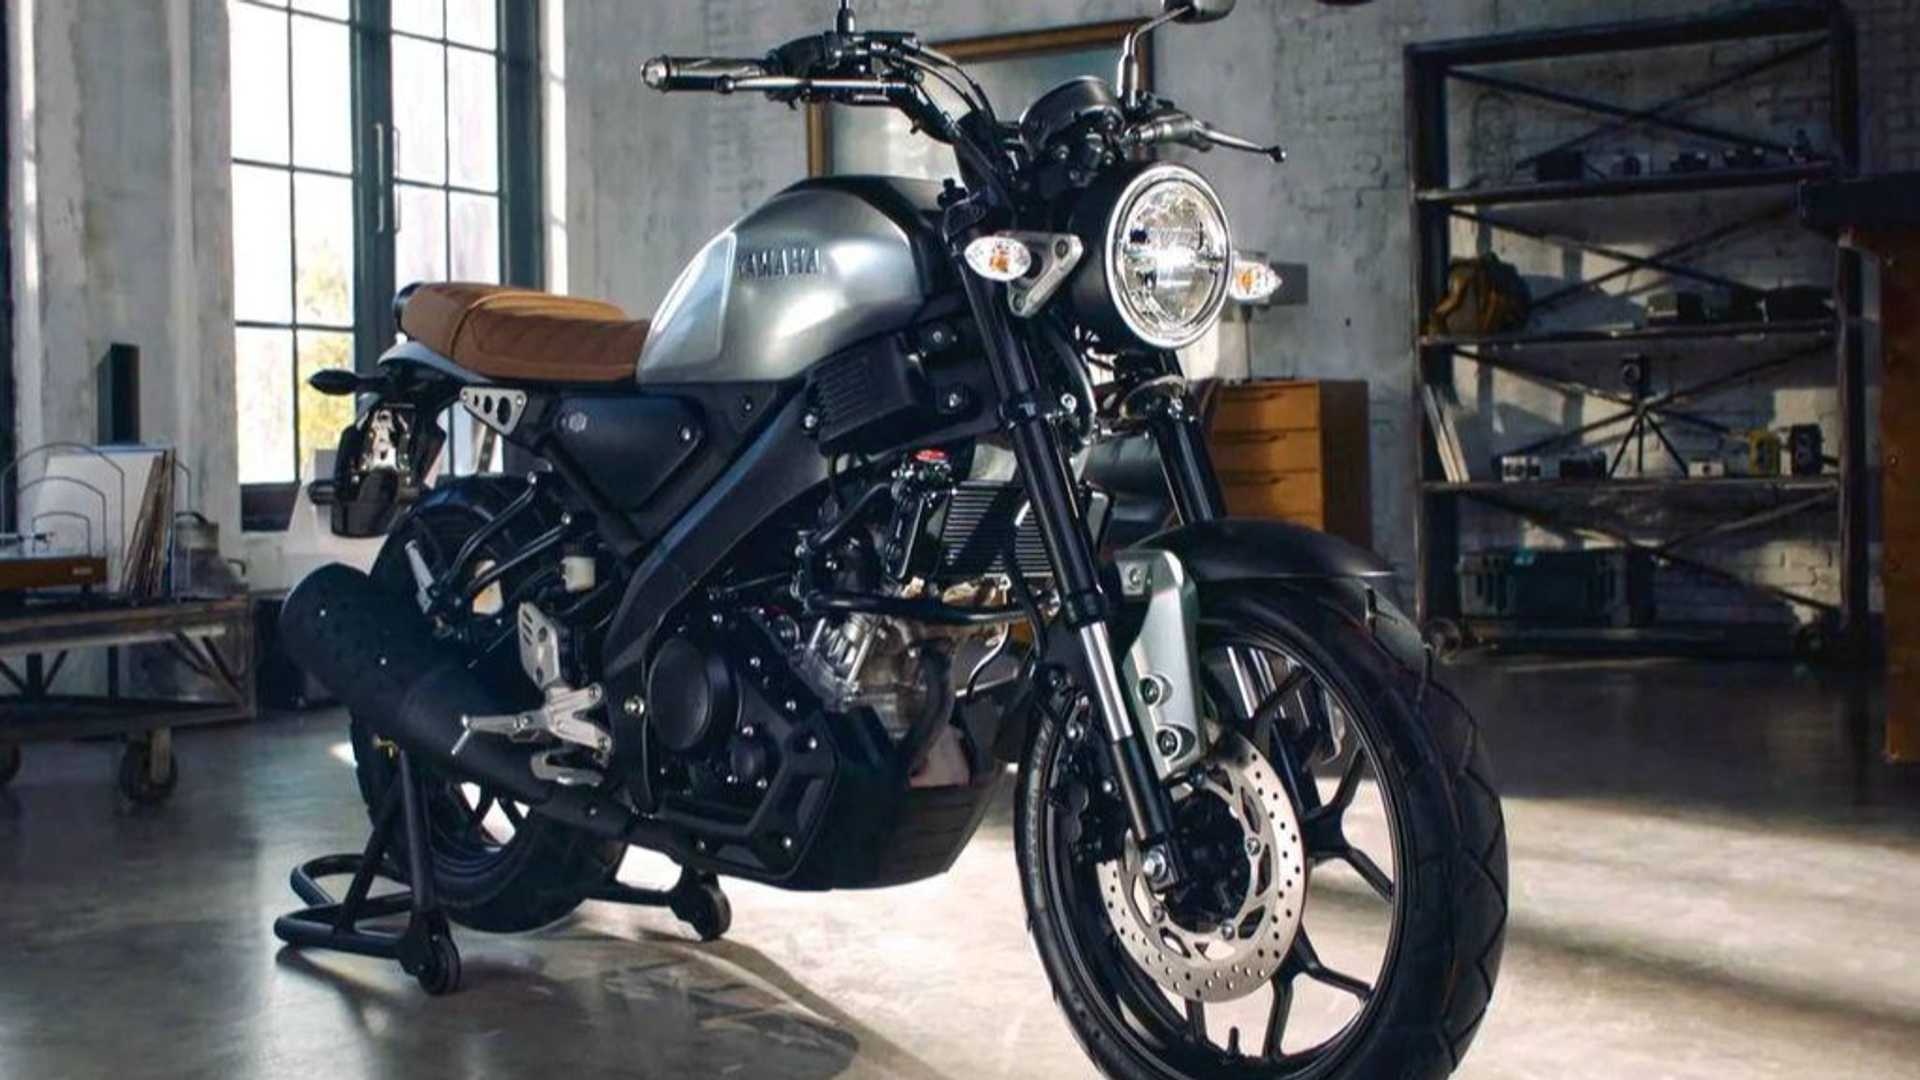 Yamaha XSR 155, Stylish bike wallpapers, High-quality backgrounds, Sporty motorcycle, 1920x1080 Full HD Desktop